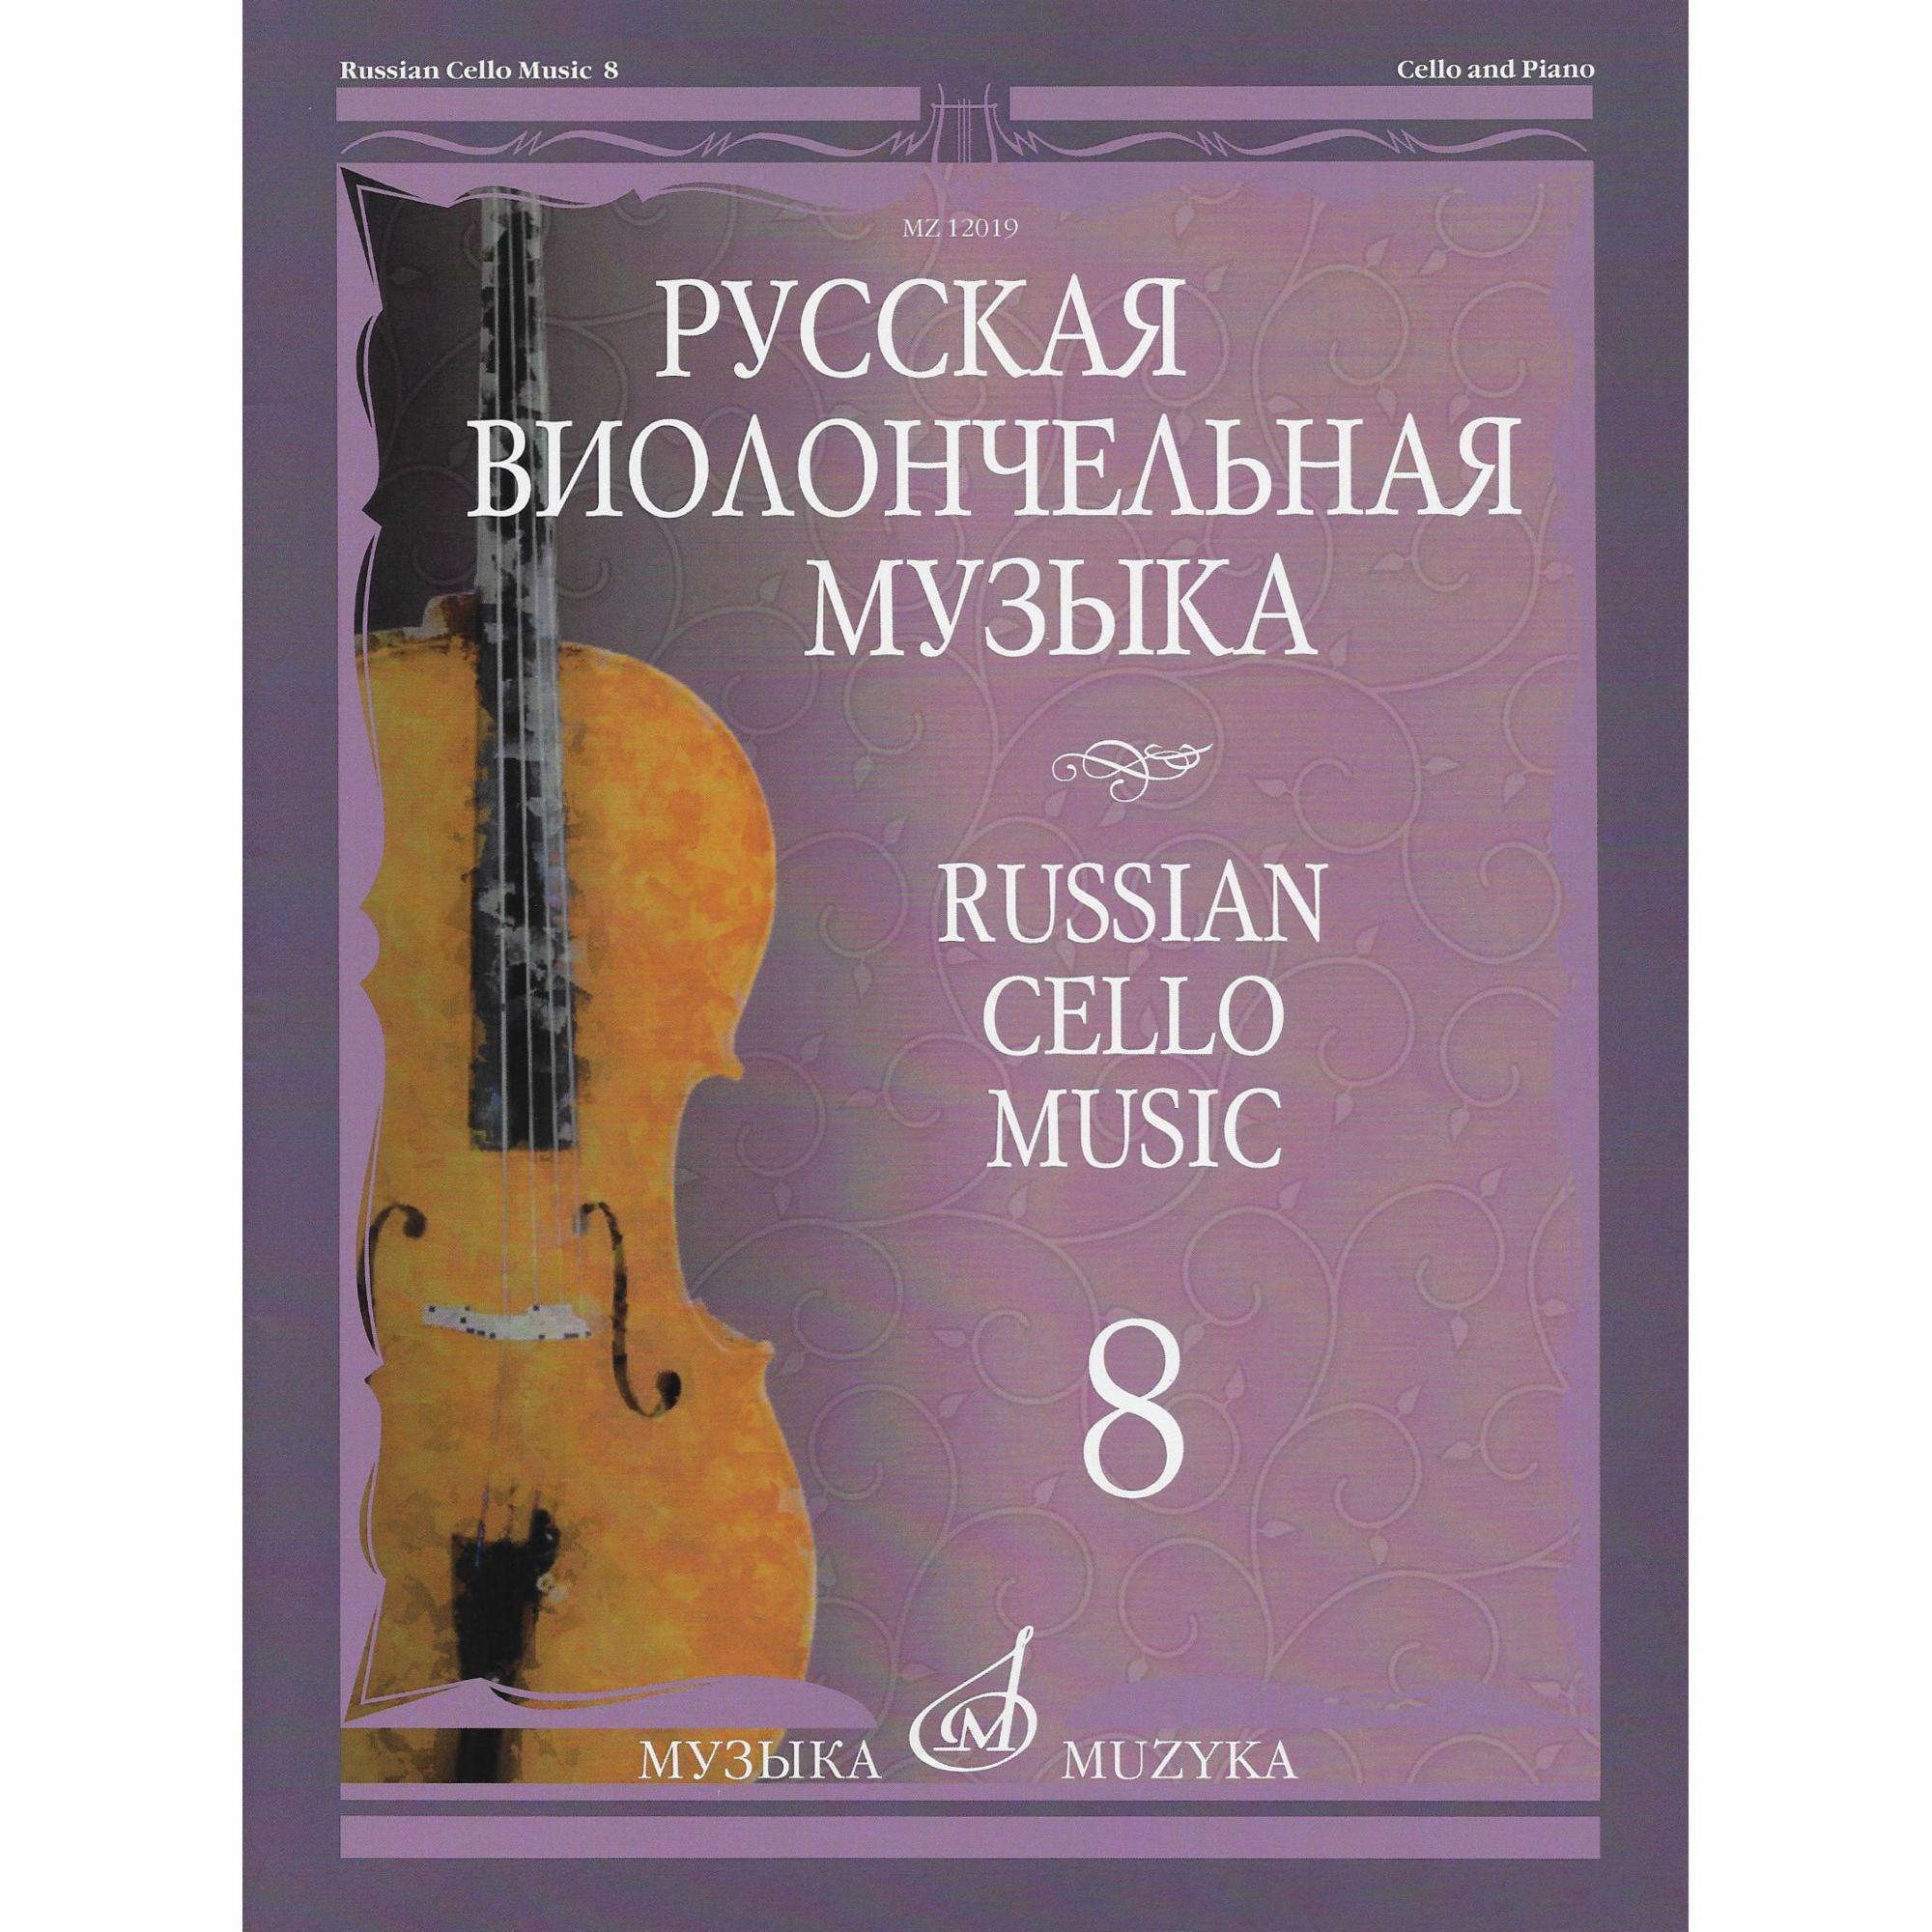 Rachmaninoff -- Works for Cello and Piano (Russian Cello Music, Volume 8)